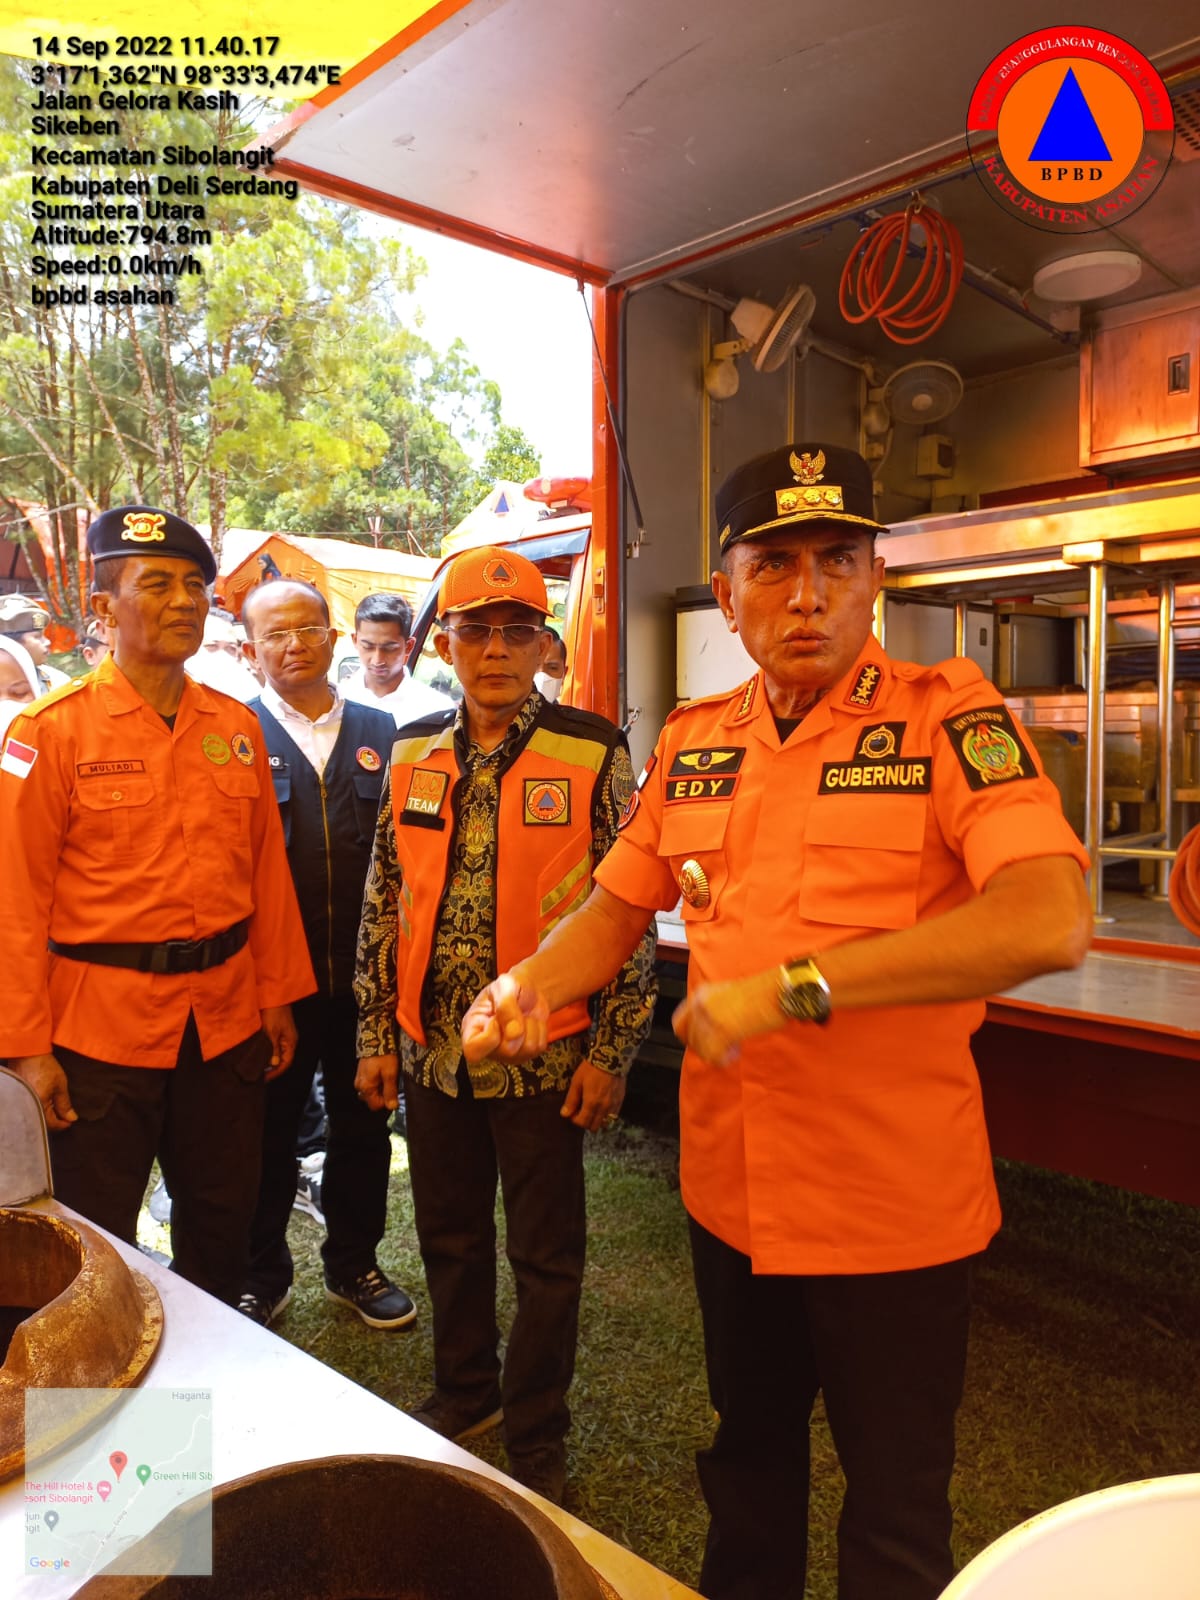 Kunjungan Bapak Gubernur Sumatera Utara ke Tenda Stand BPBD Kab. Asahan dalam acara Jambore Jambore Penanggulangan Bencana Sumatera Utara 2022.